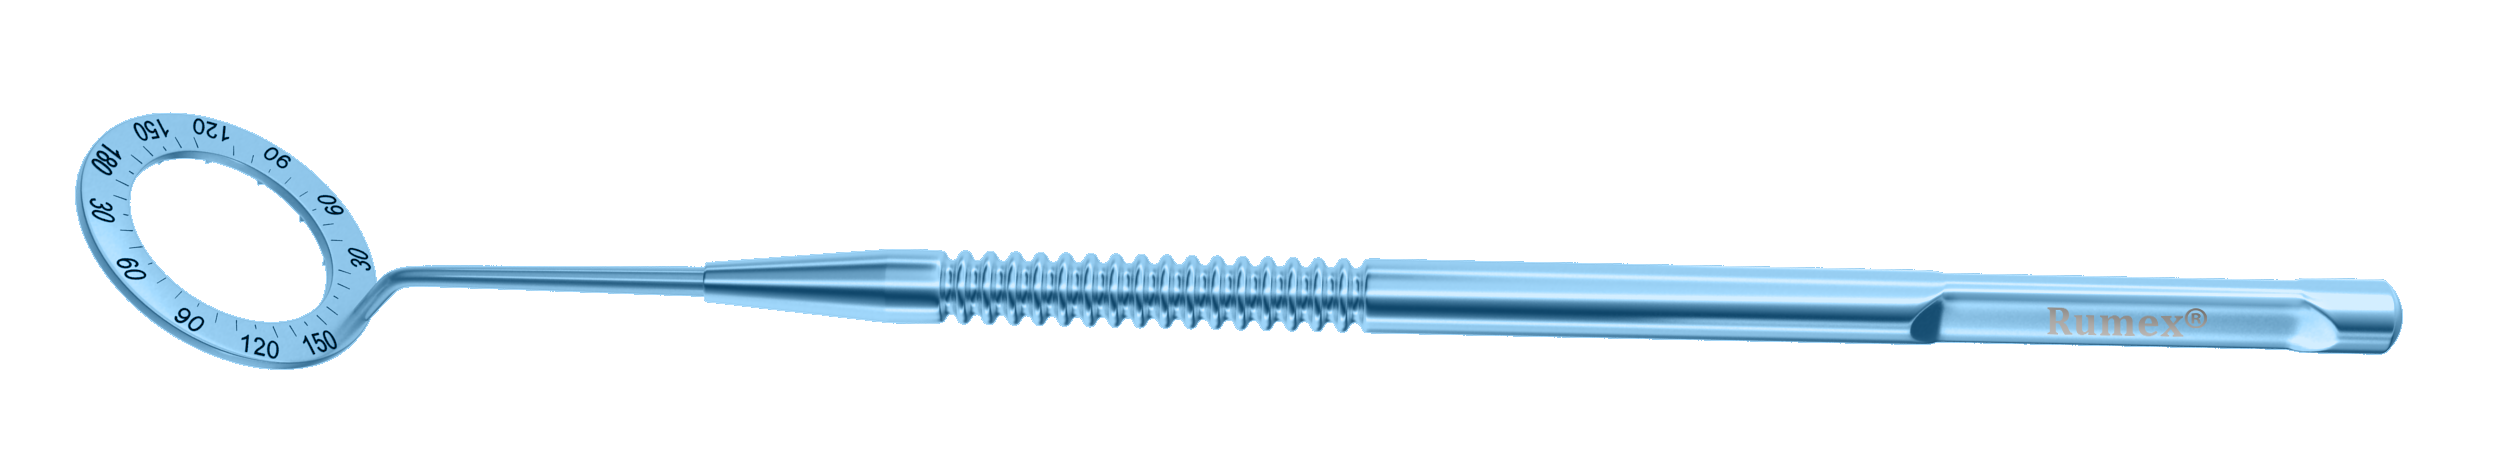 574R 2-031T LRI Gauge, with Atraumatic Fixation Teeth, 13.00/19.00 mm Diameters, Length 134 mm, Titanium